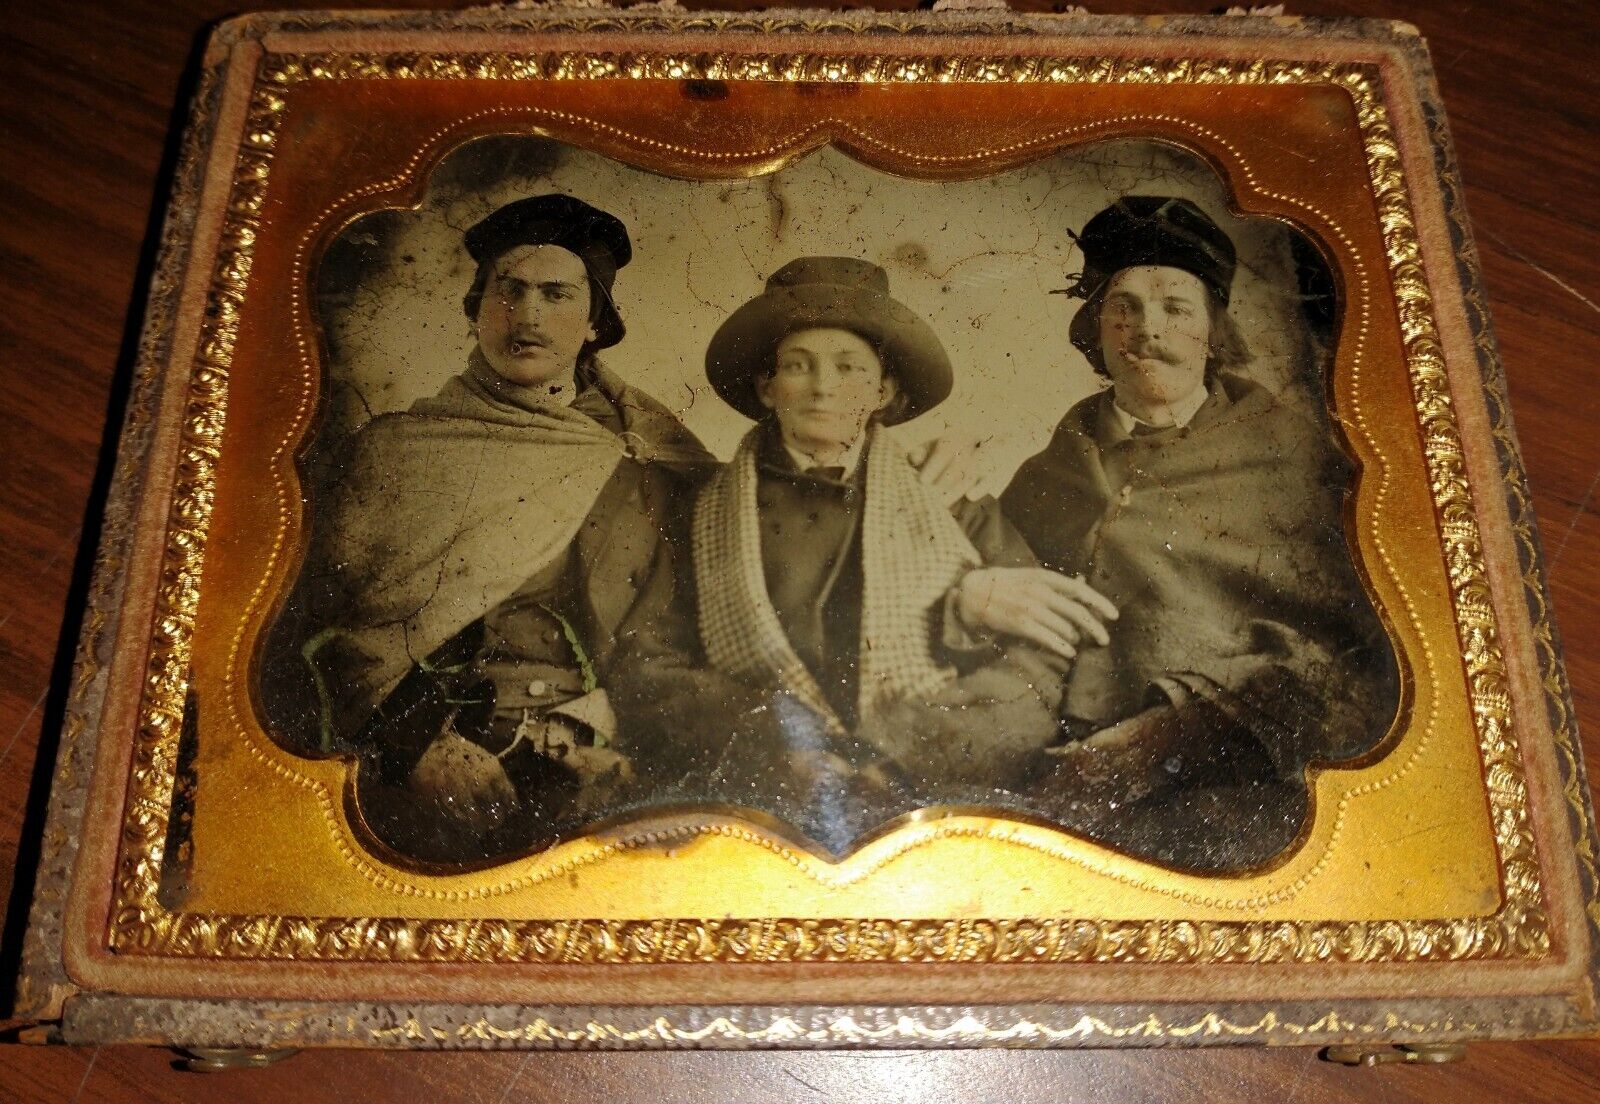 Civil War Era Ambrotype Photo Two Men Soldiers Holding Women Outlaw? in Custody